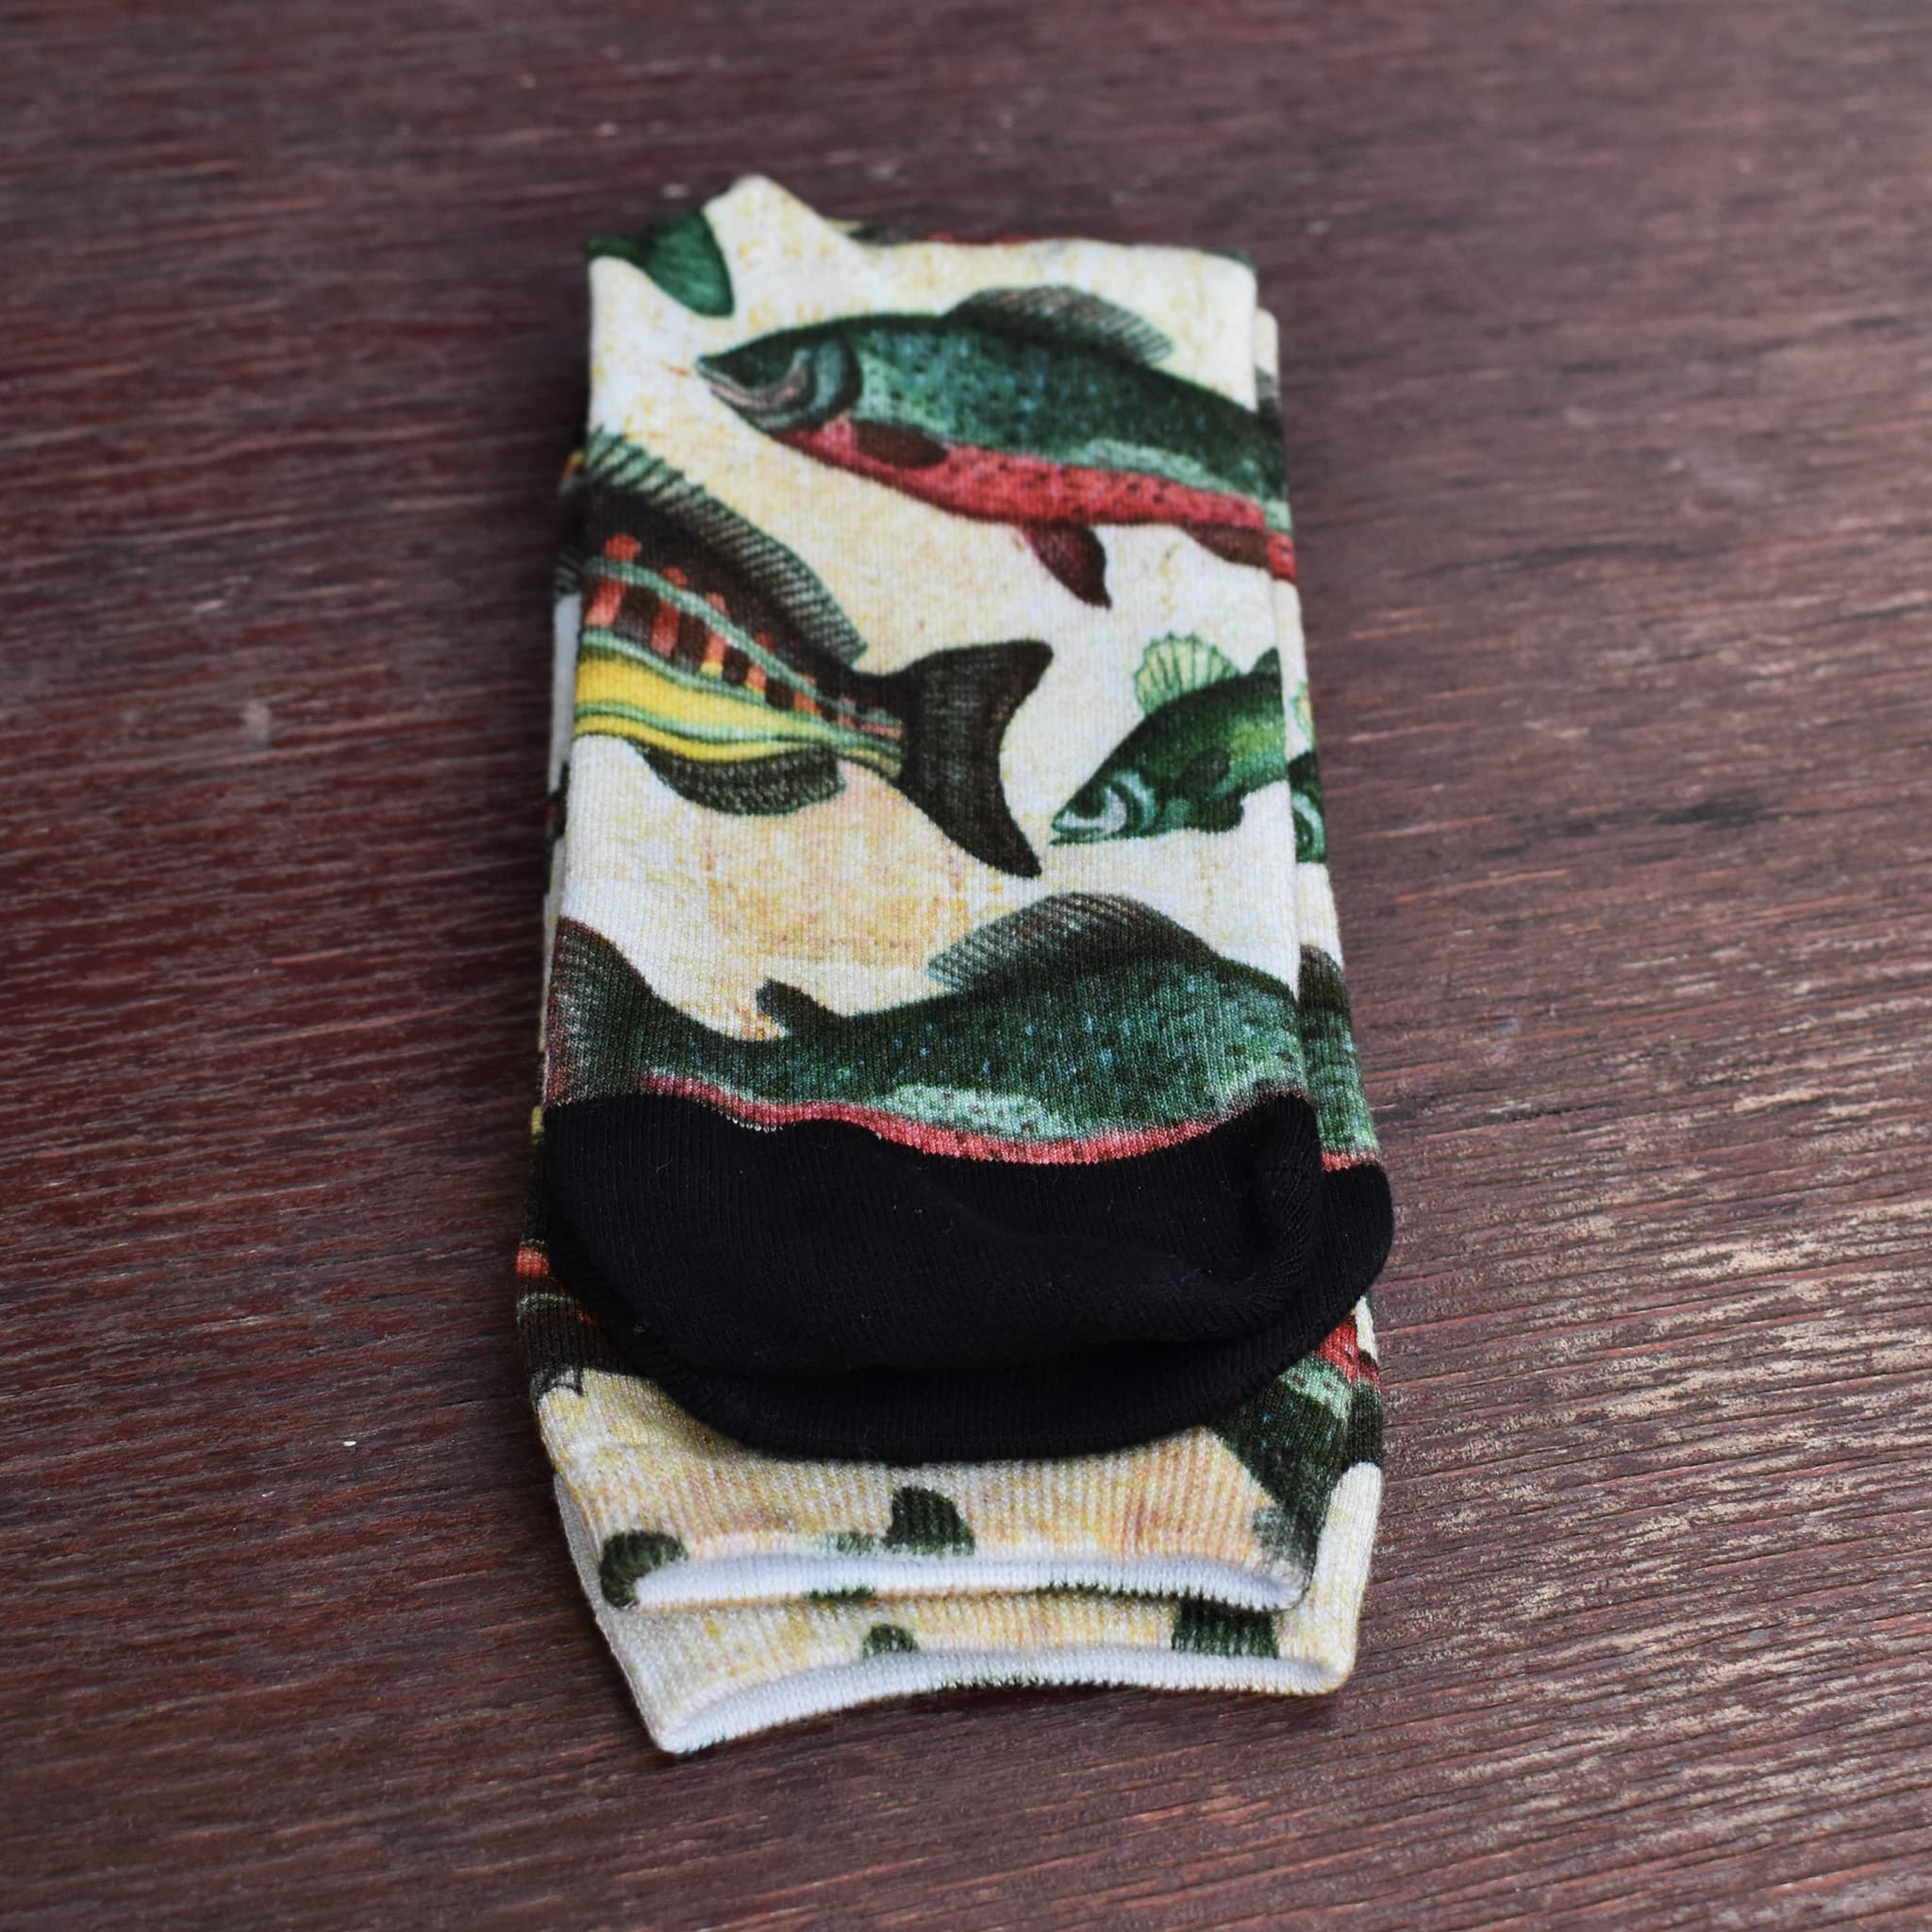 Patterned socks, something fishy